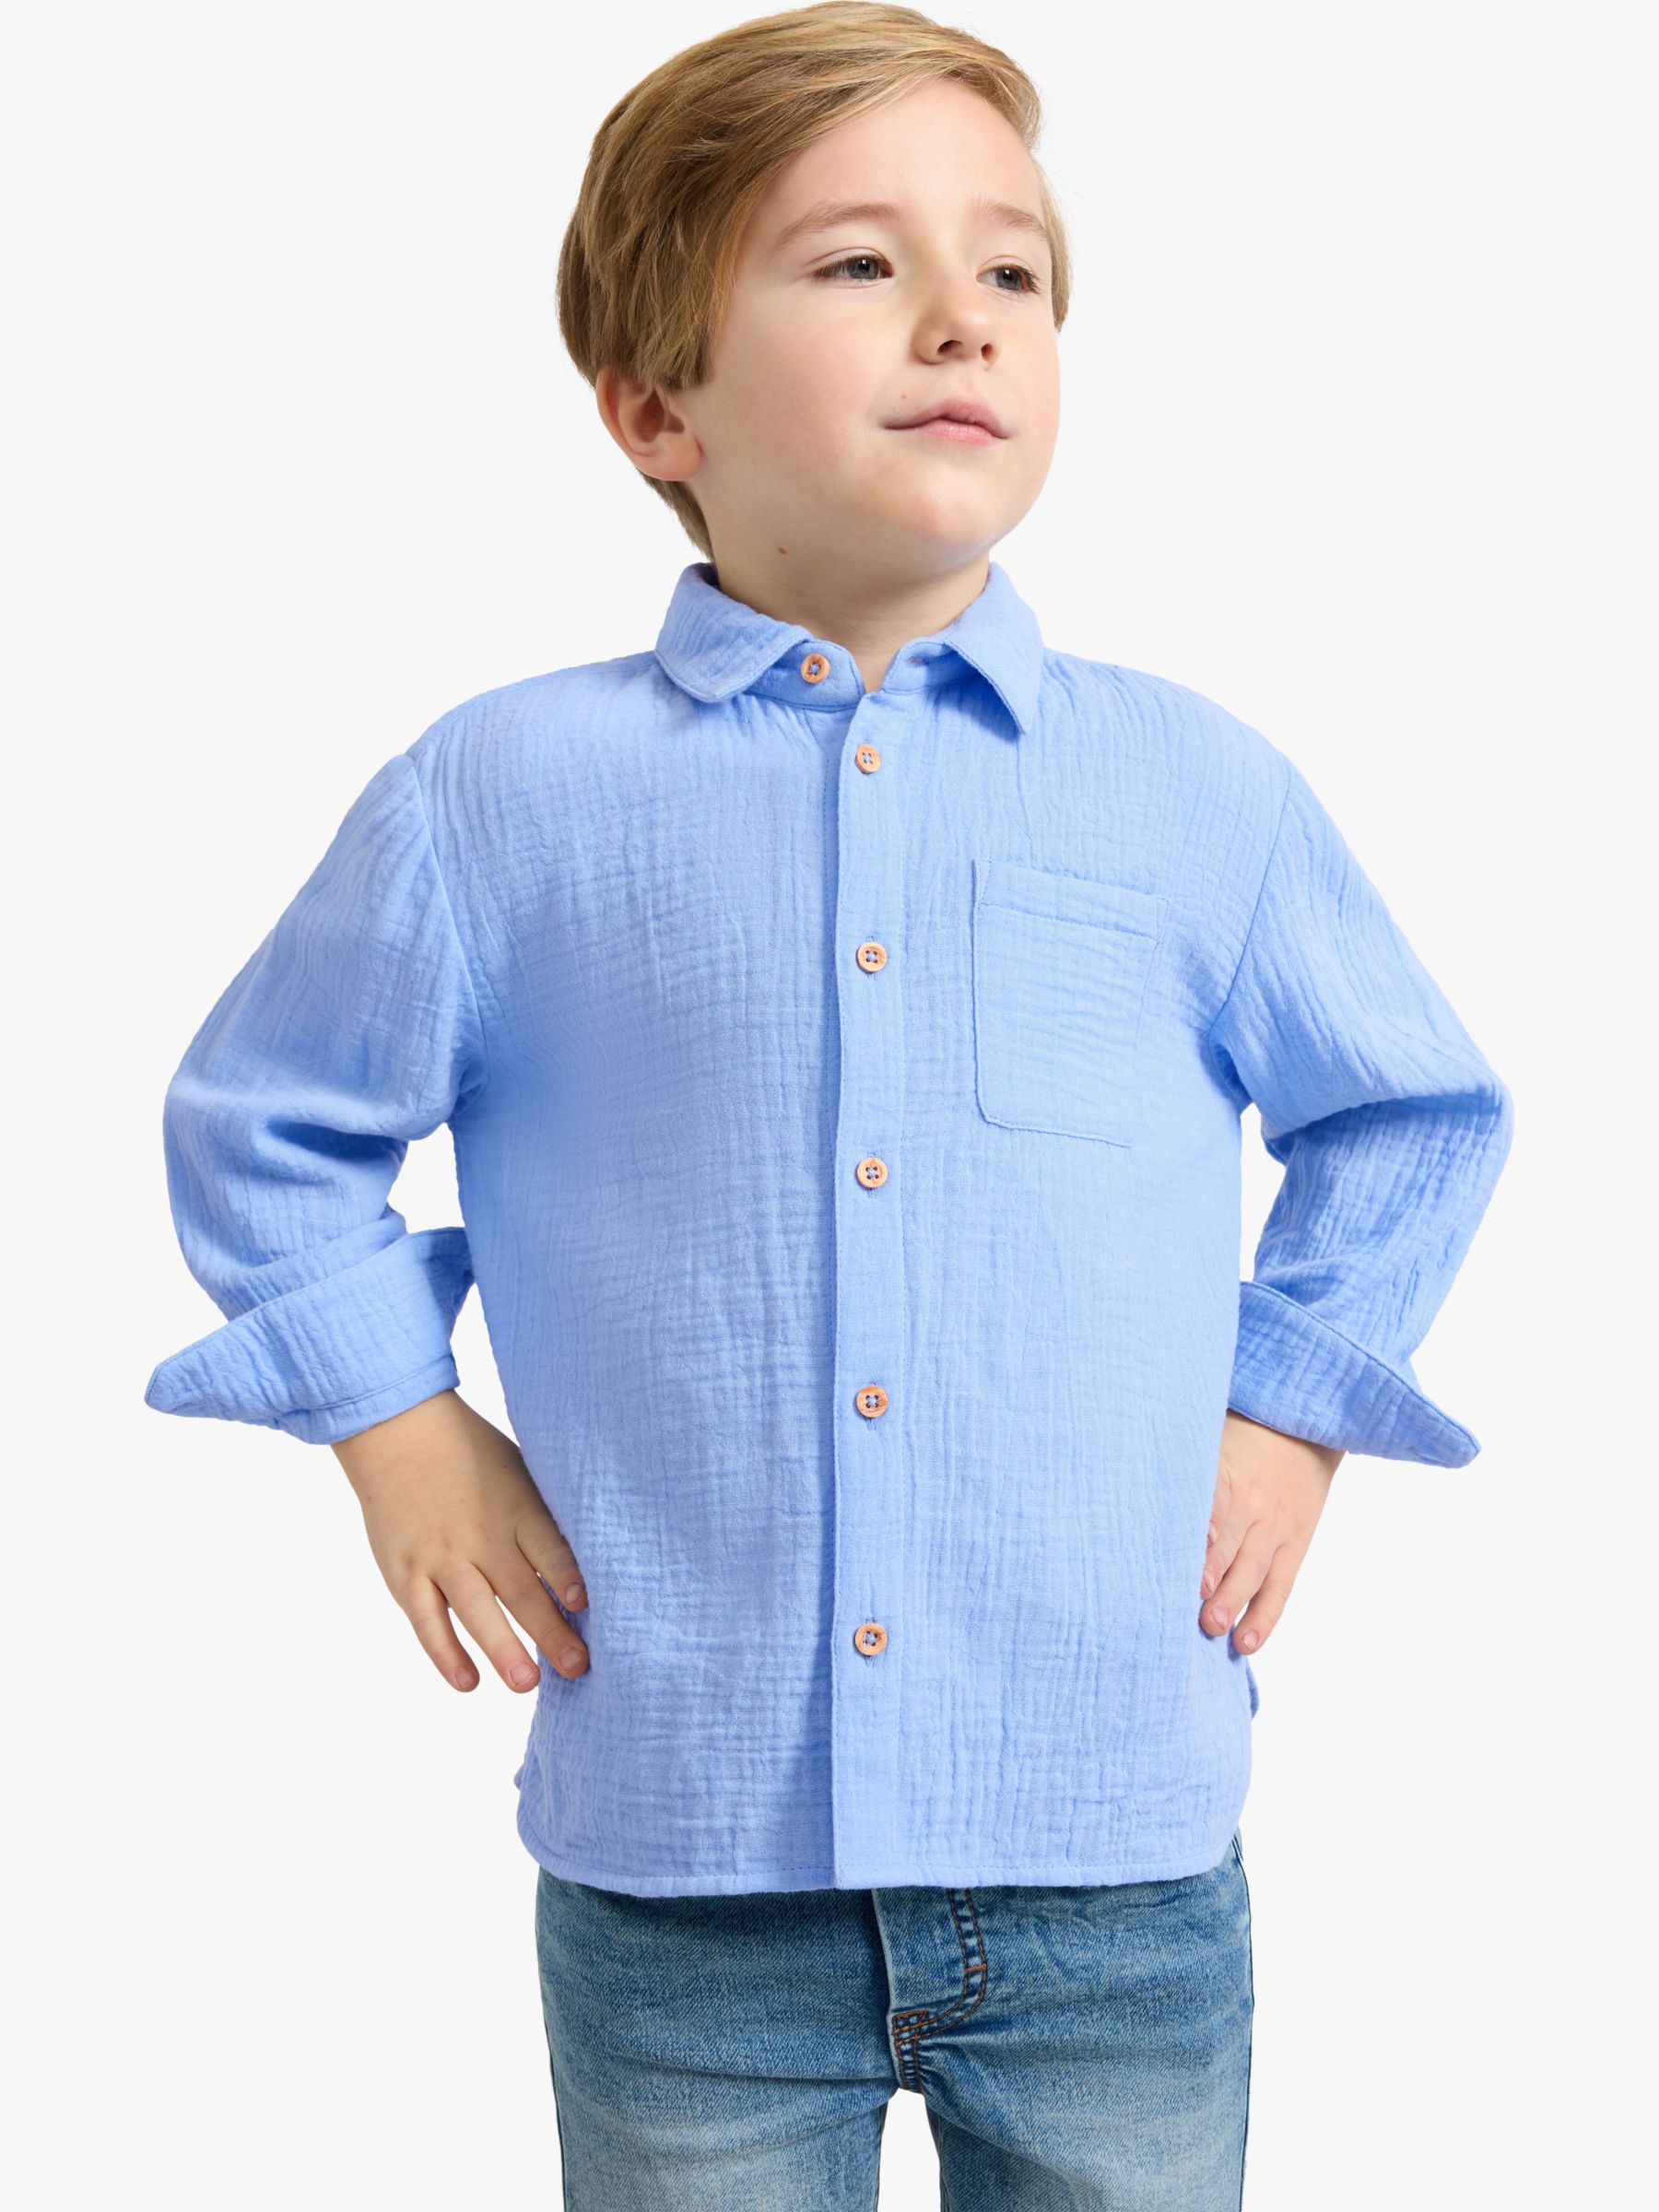 Lindex Kids' Organic Cotton Double Weave Shirt, Light Blue, 5-6 years